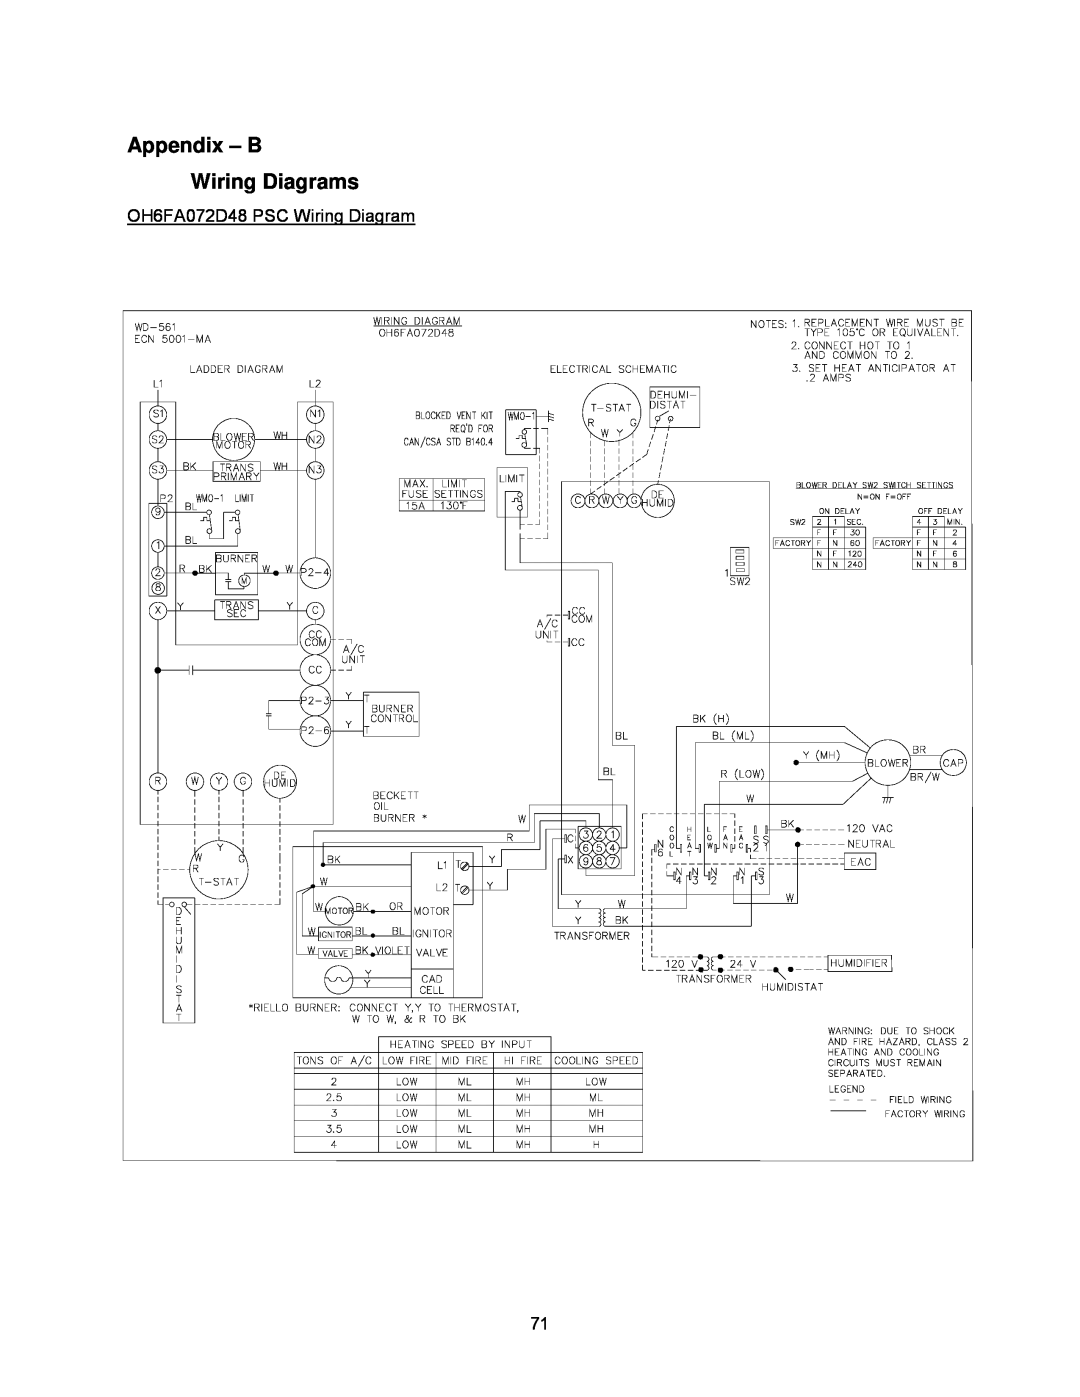 Thermo Products OH6FX072DV4R, OH8FA119DV5R, OH8FA119D60R Appendix – B Wiring Diagrams, OH6FA072D48 PSC Wiring Diagram 71 